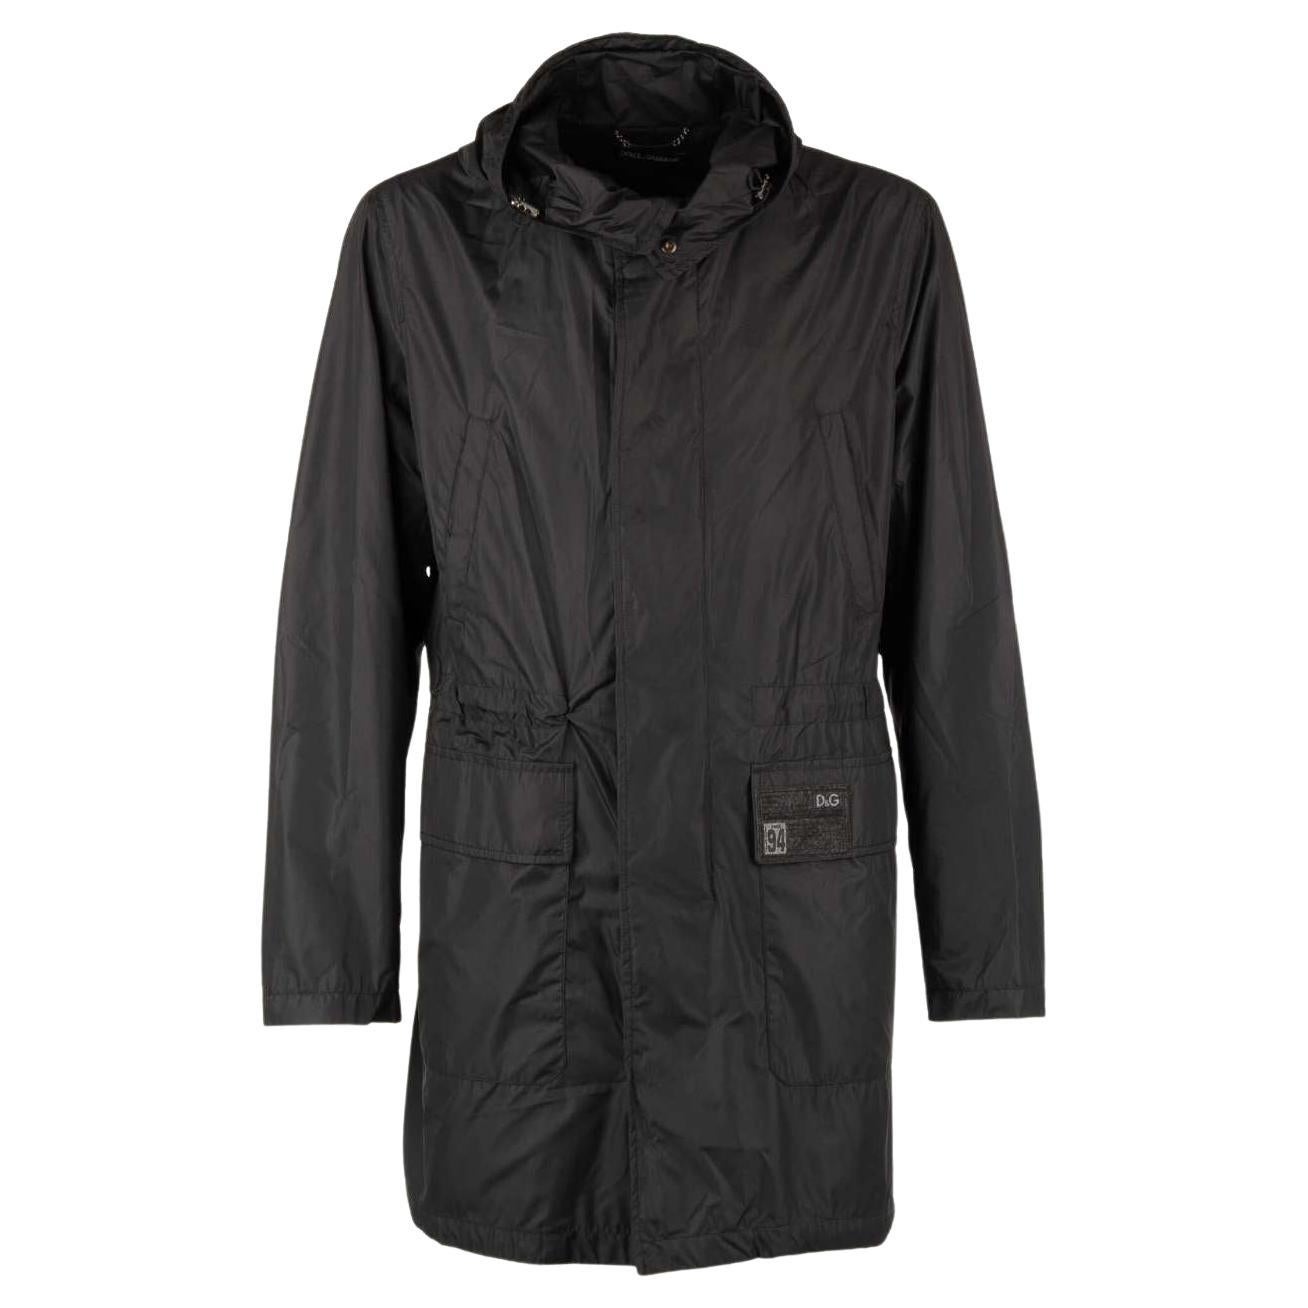 Dolce & Gabbana Light Hooded Rain Parka Jacket with Pockets and Logo Black 50 For Sale